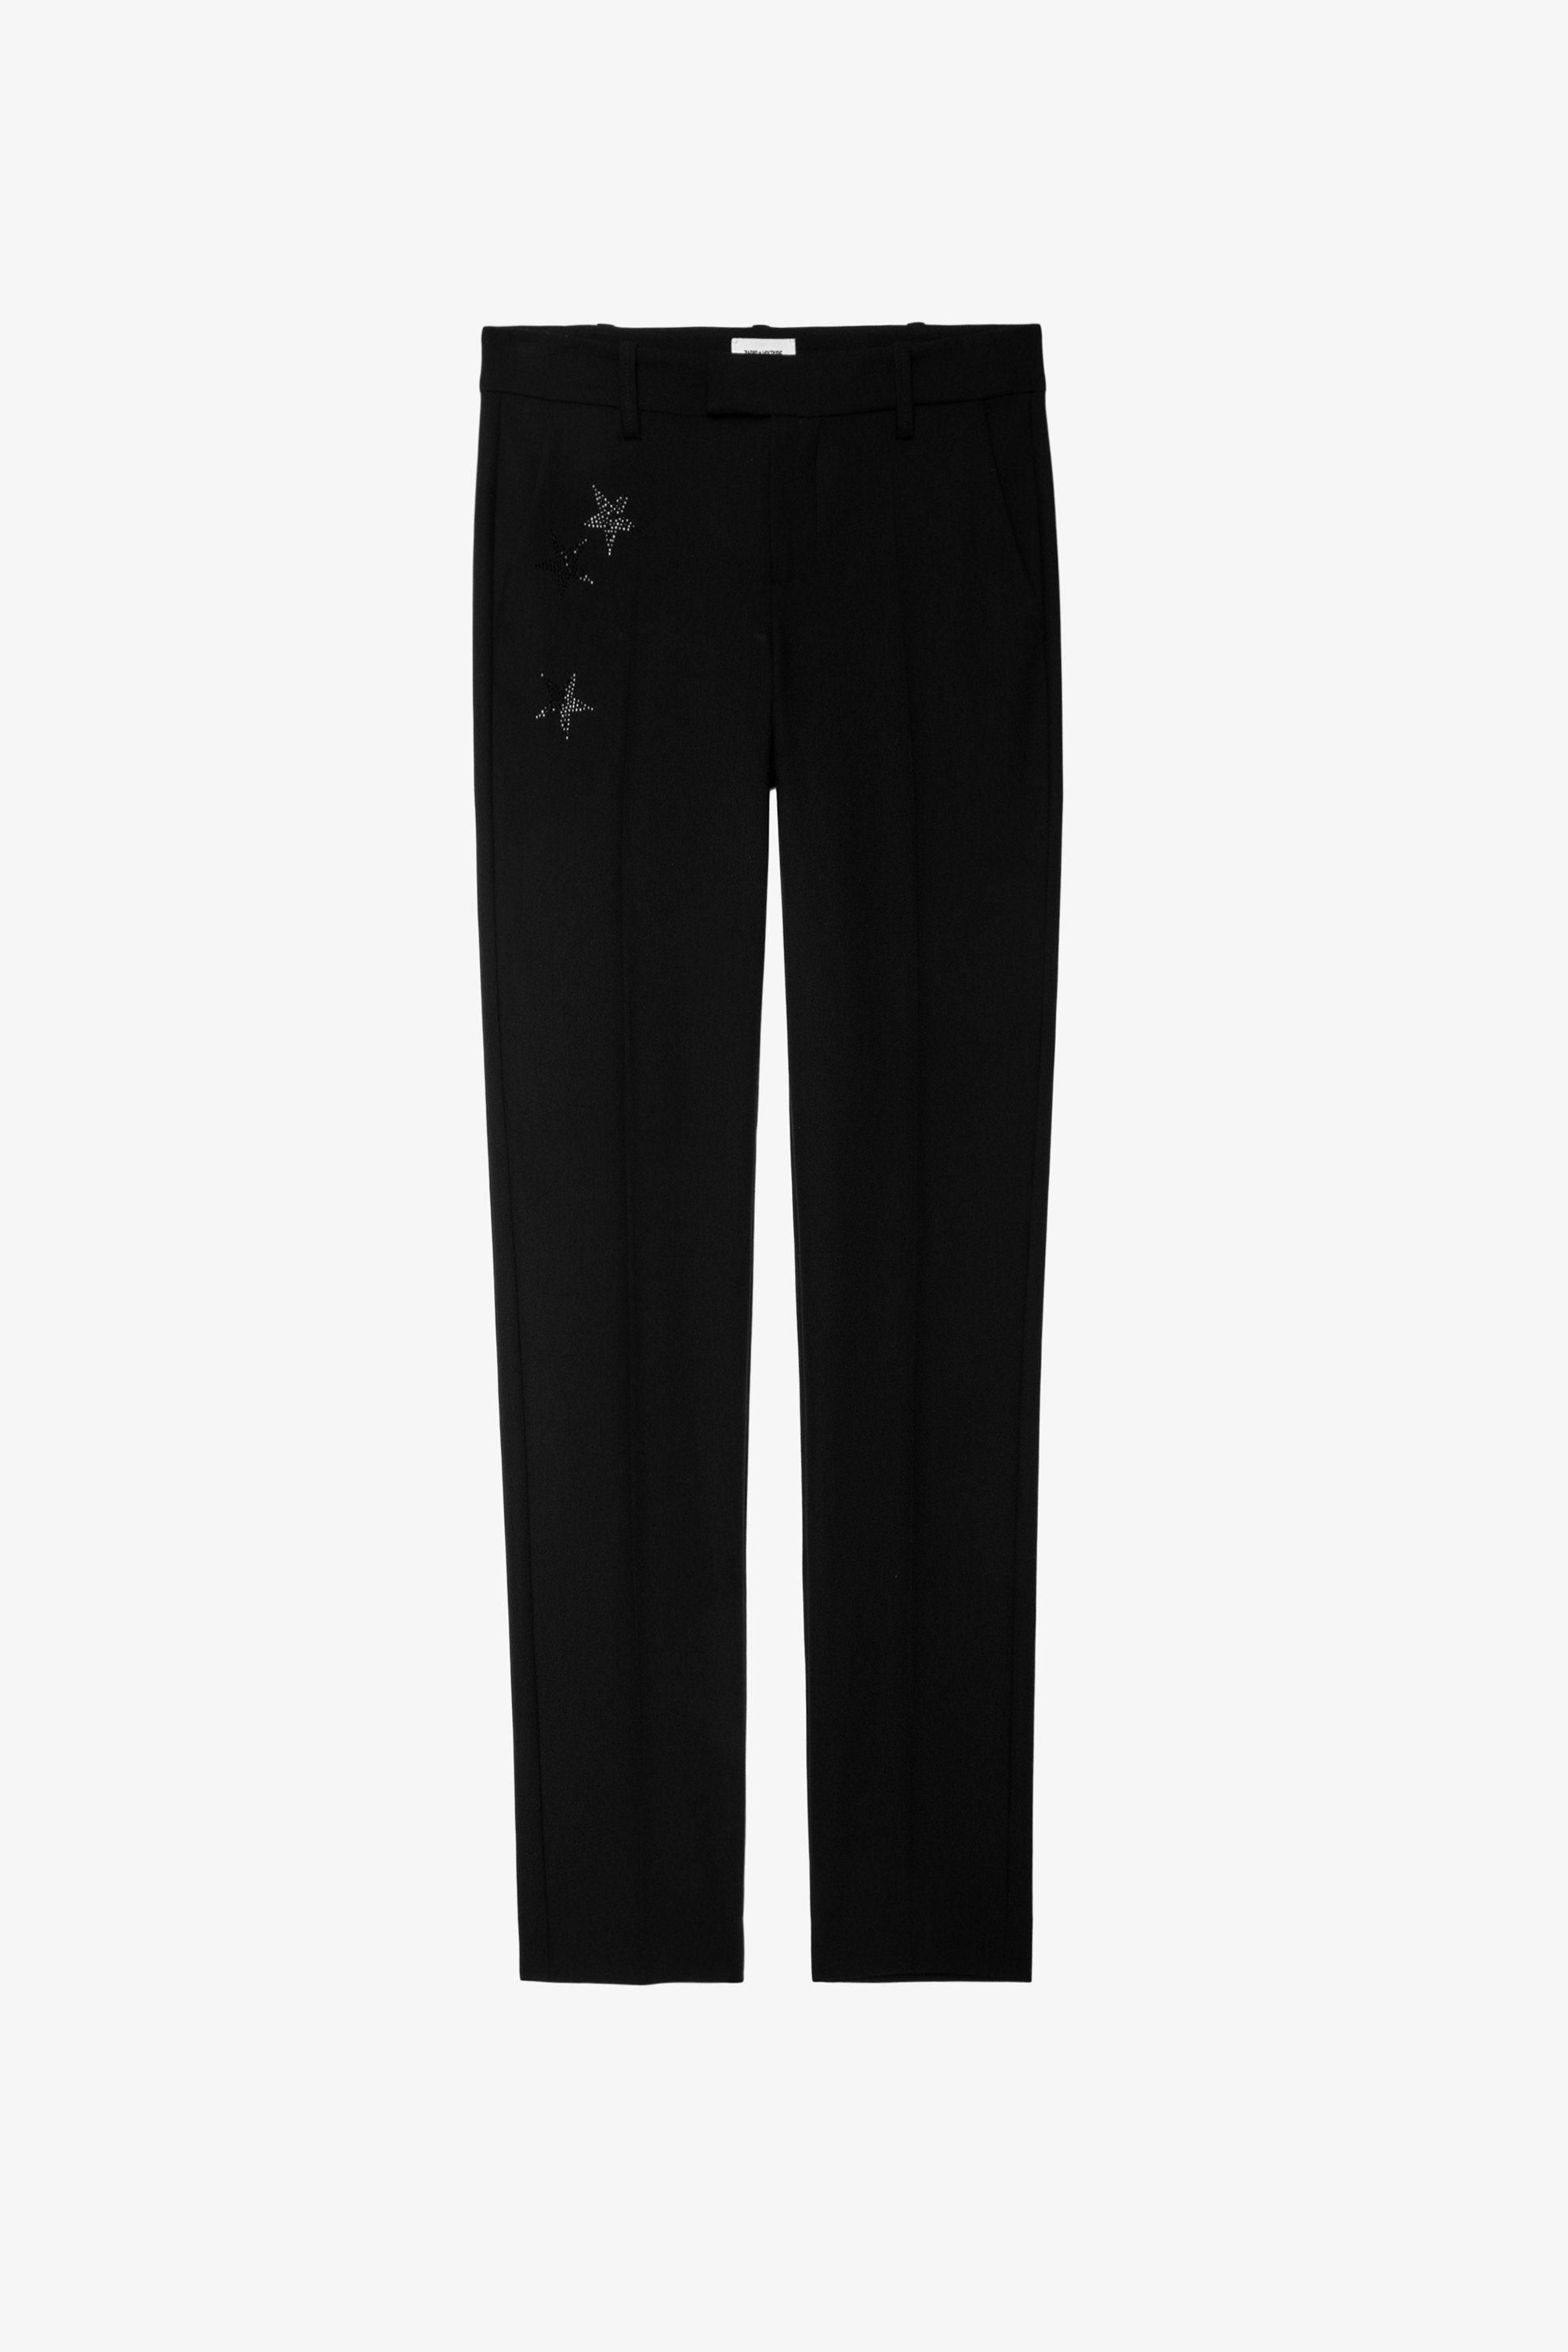 Pantalon Prune Strass Star - Pantalon de tailleur noir à motif étoiles en strass.